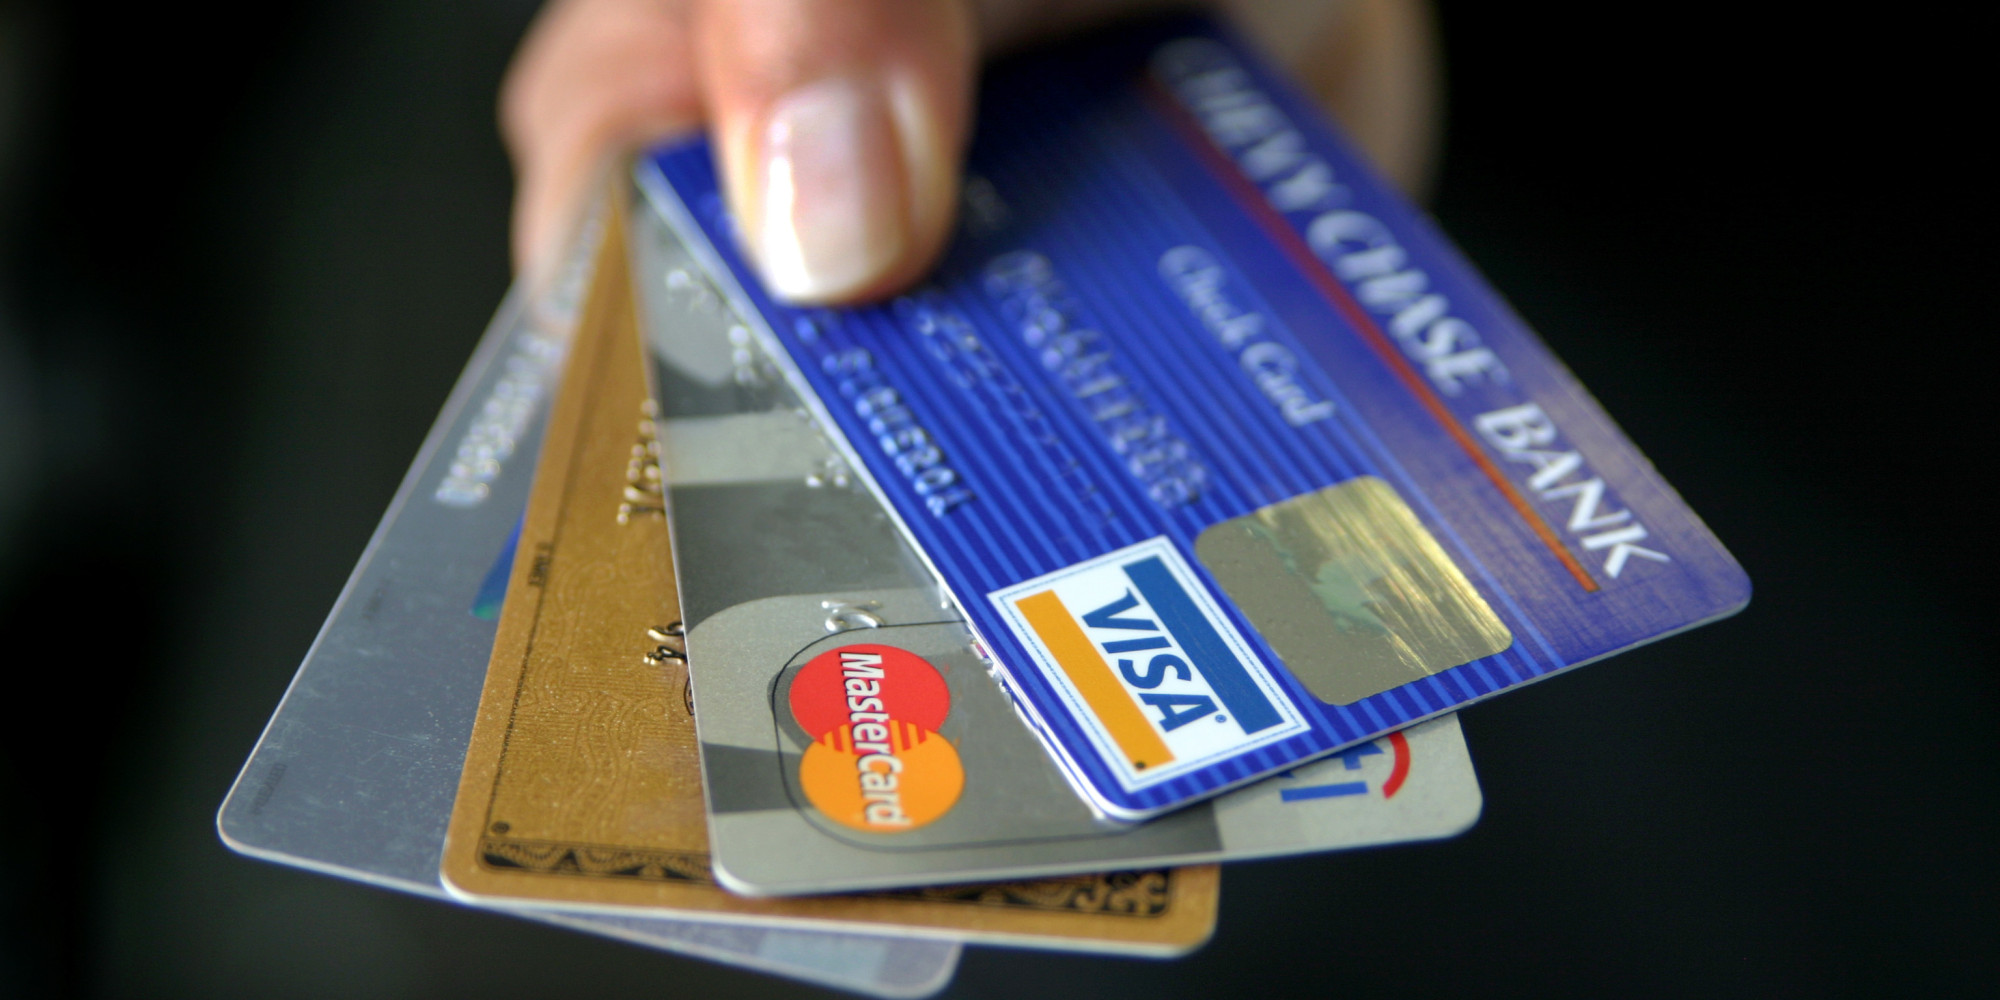 ach debit or credit carddebit card